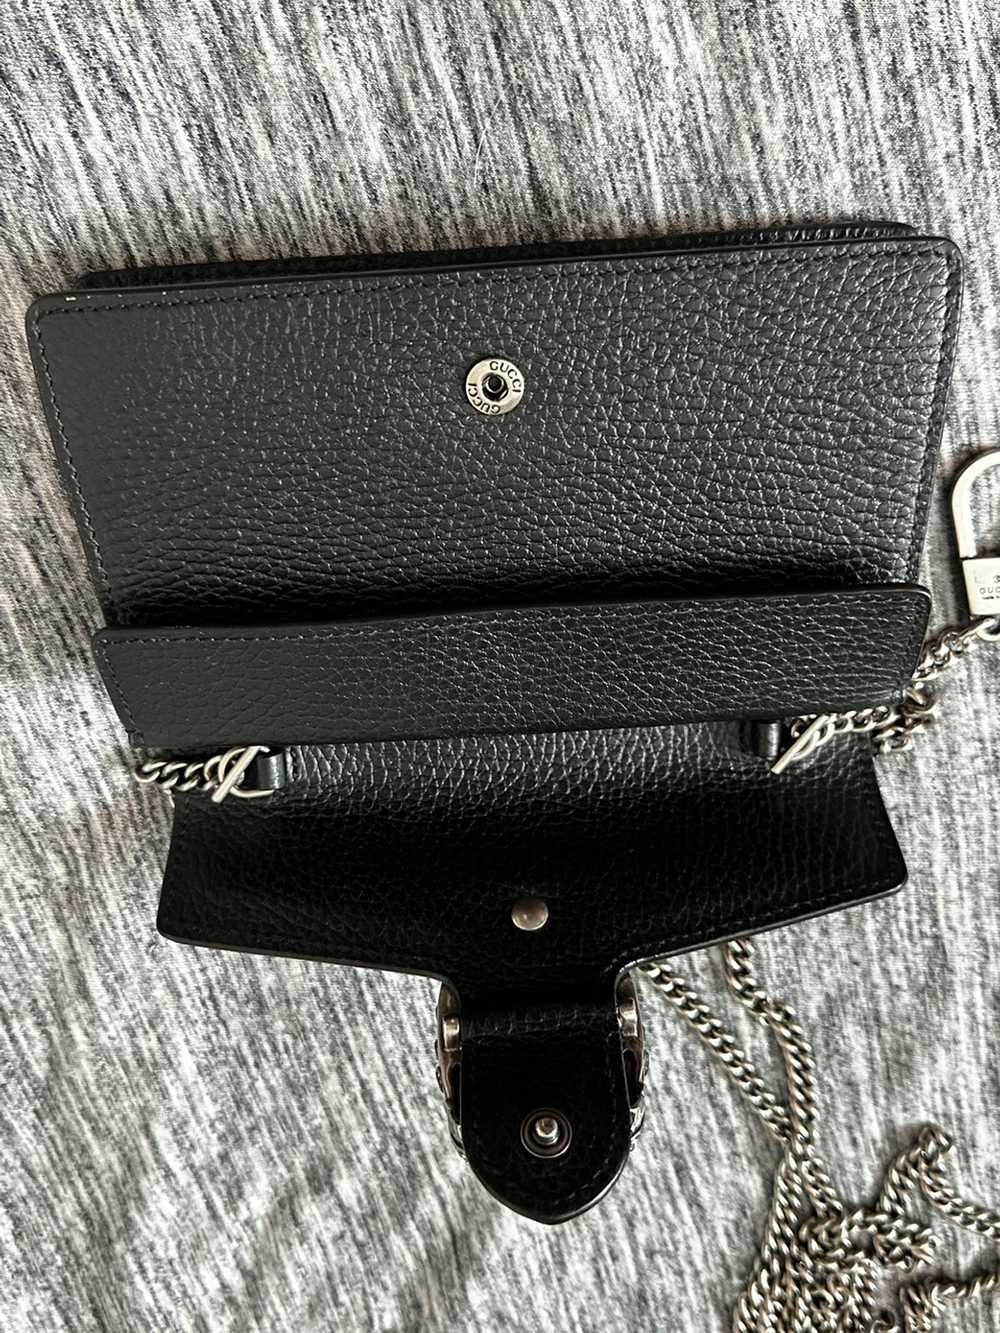 Gucci Gucci Dionysus Leather Super Mini Bag - image 4